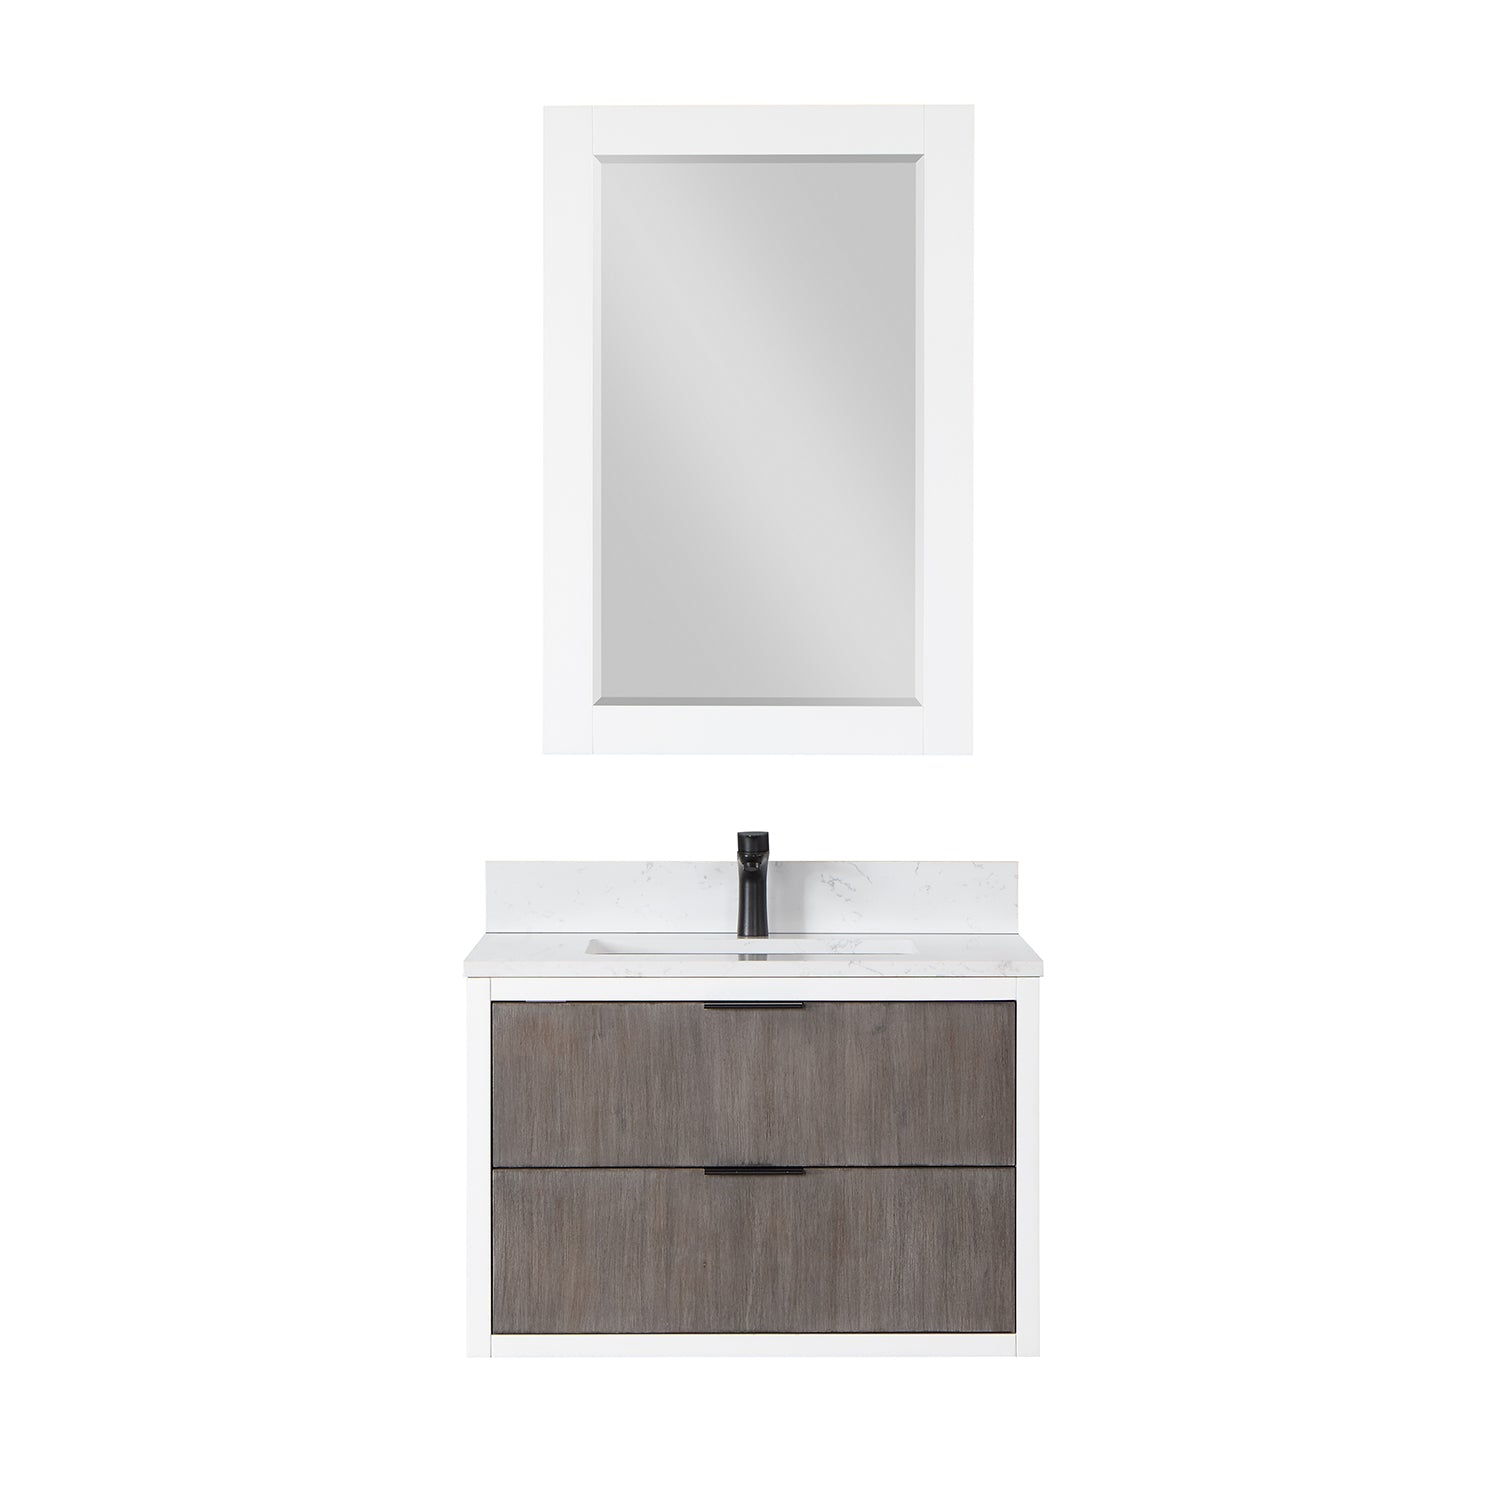 Dione Single Bathroom Vanity Set with Aosta White Stone Countertop